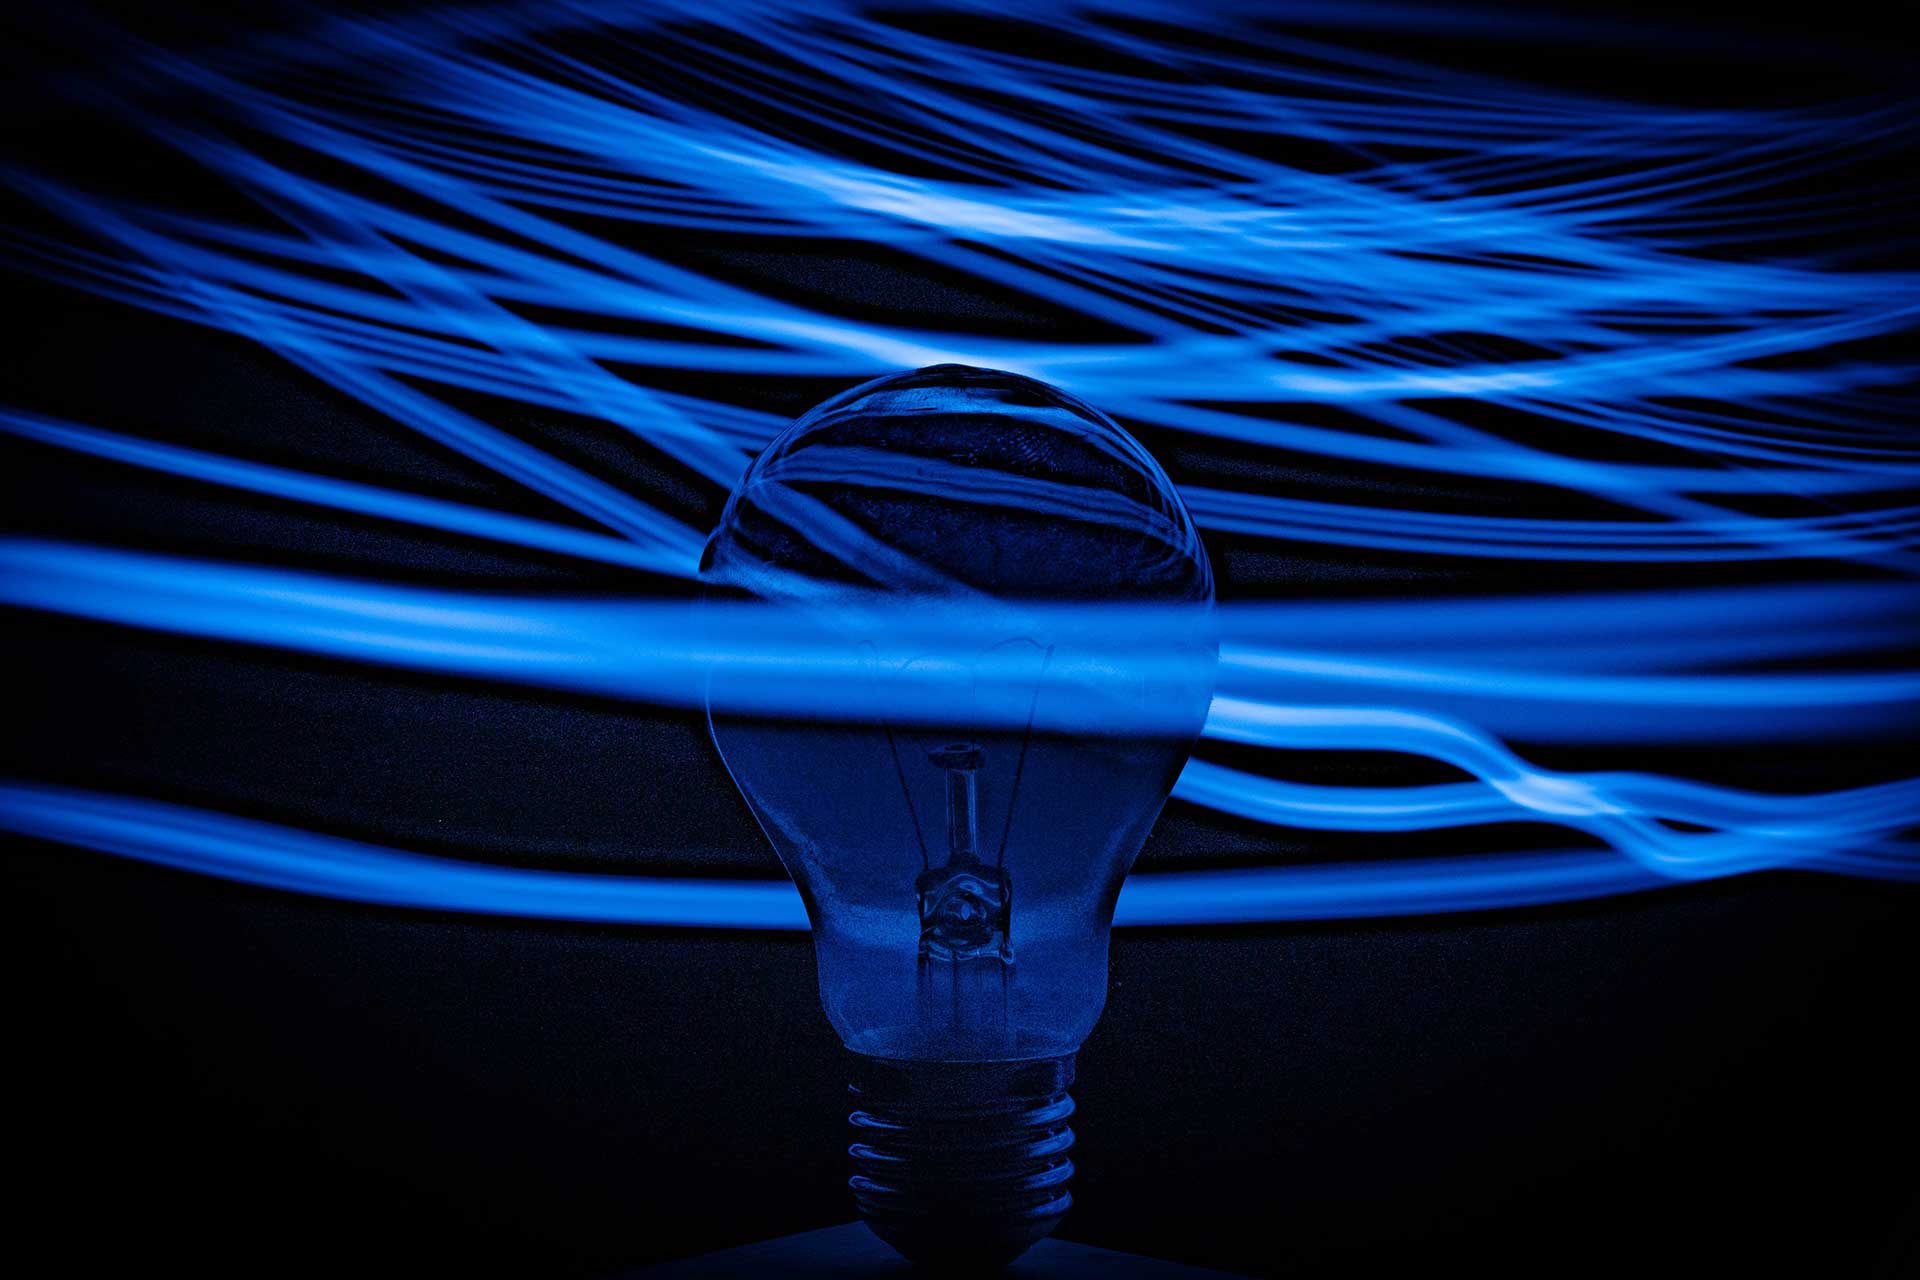 Lightbulb with Blue Spectrum Waves